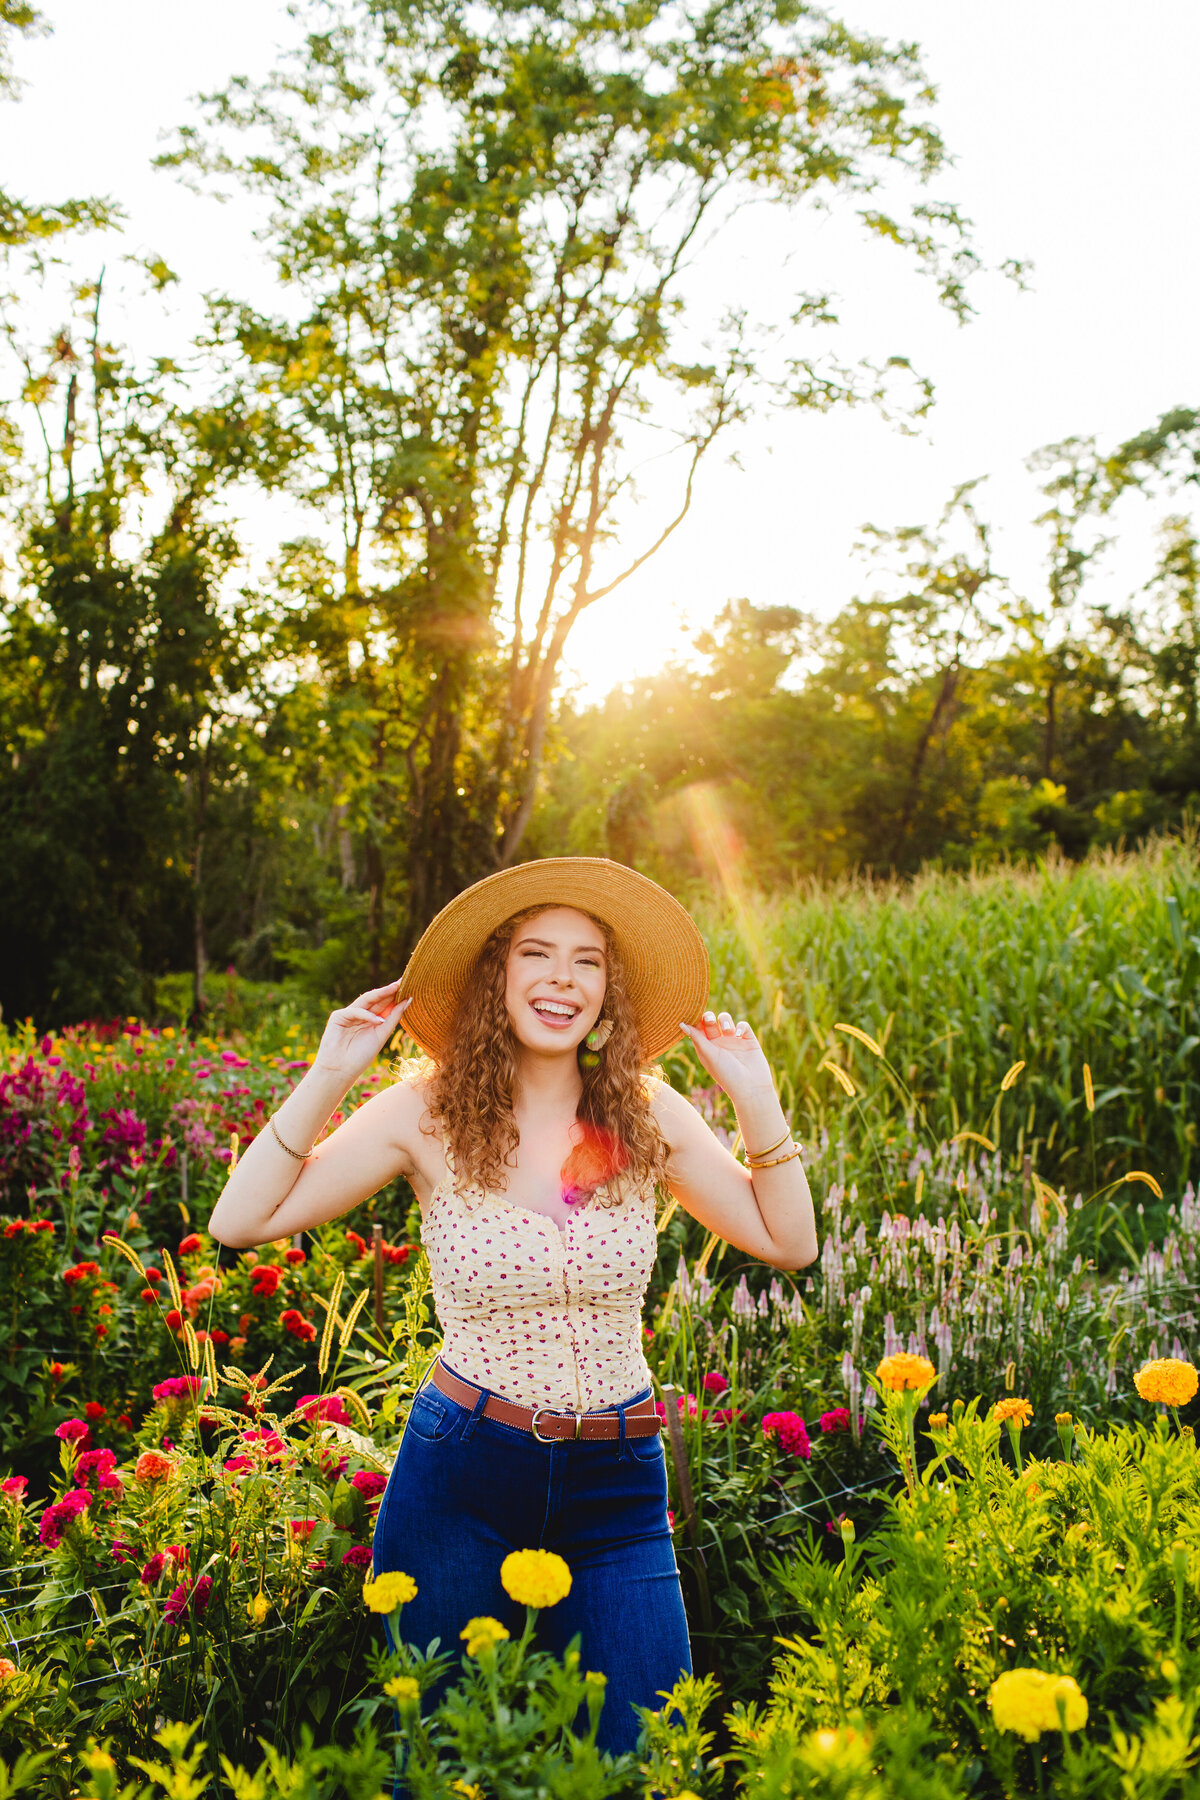 Hershey-high-school-senior-photos-flower-farm-nature-sunset-summer-session-strawhat